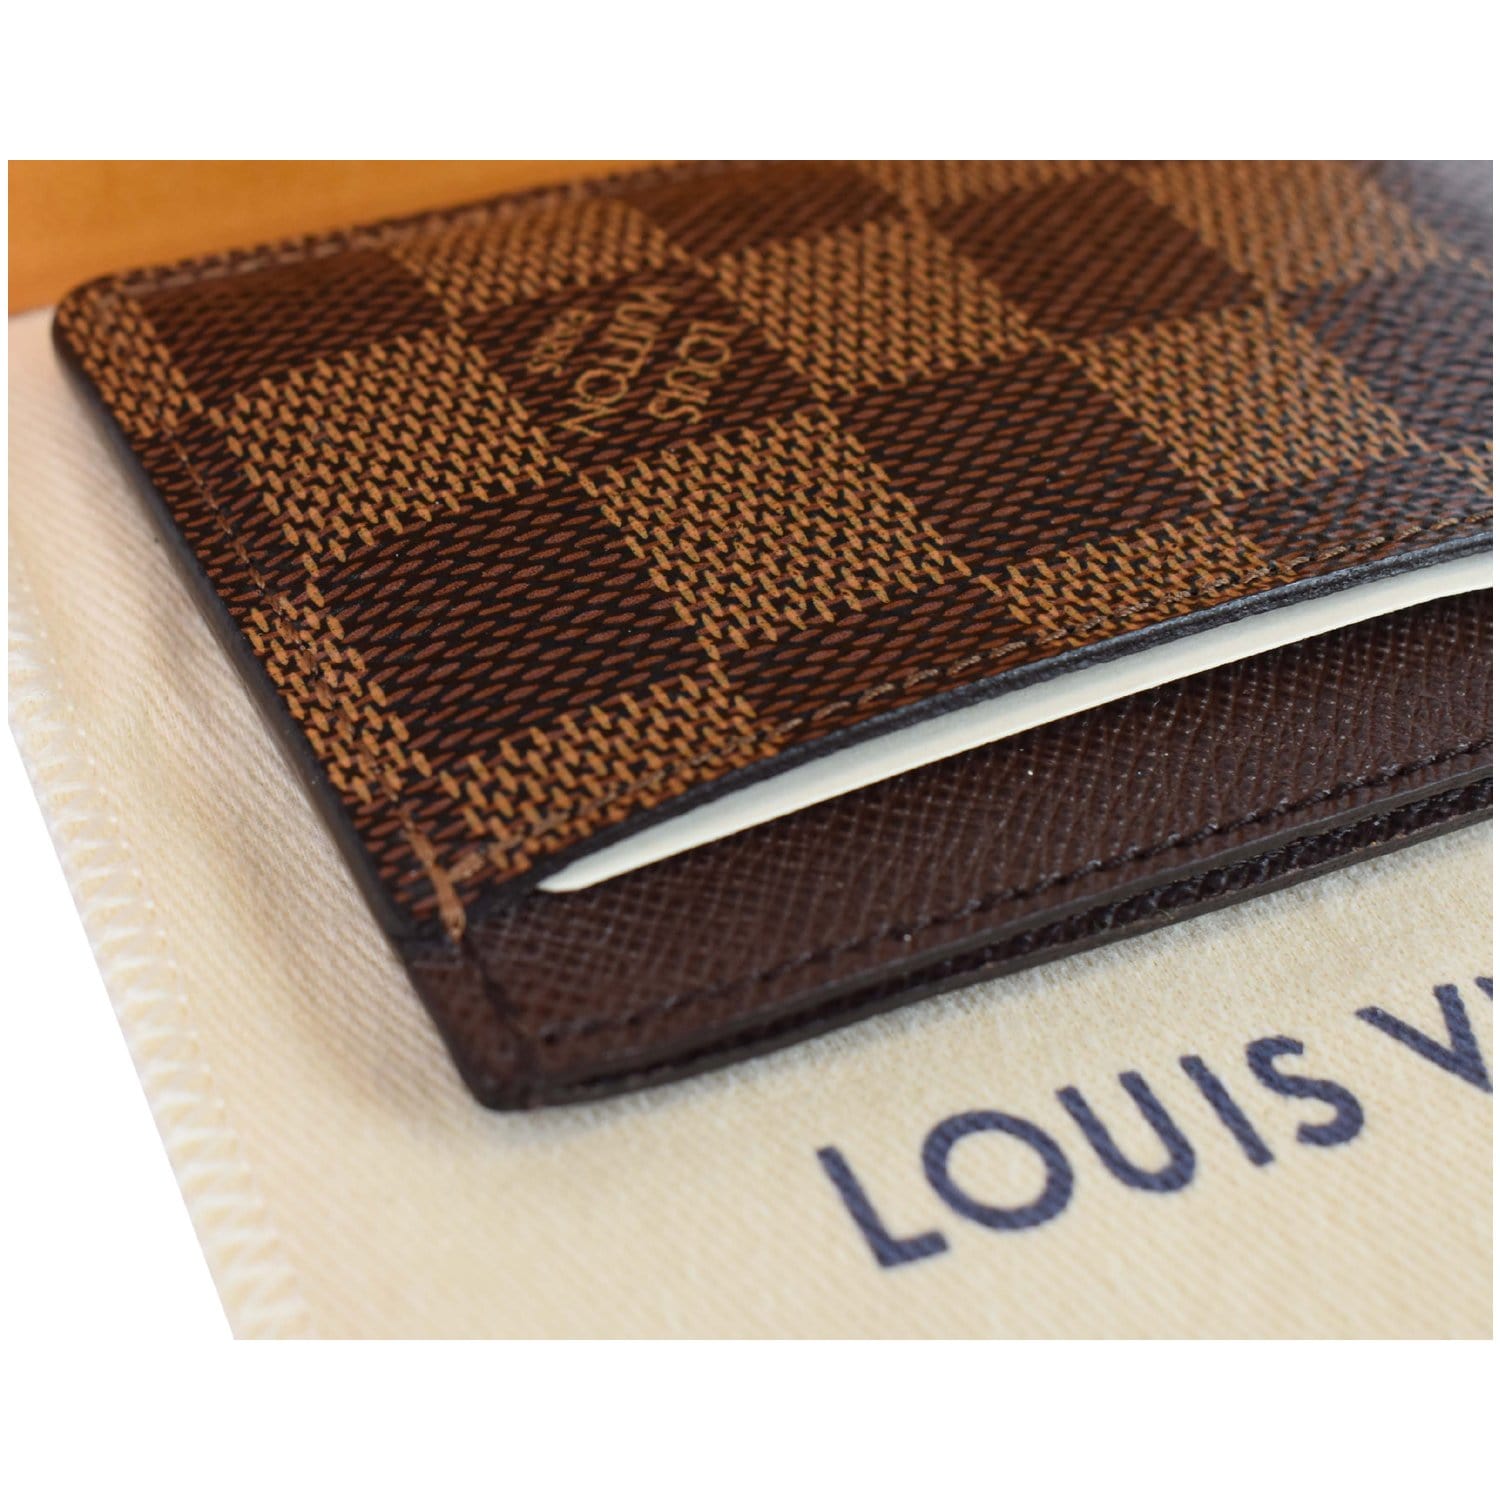 Louis Vuitton Card Holder Damier Ebene